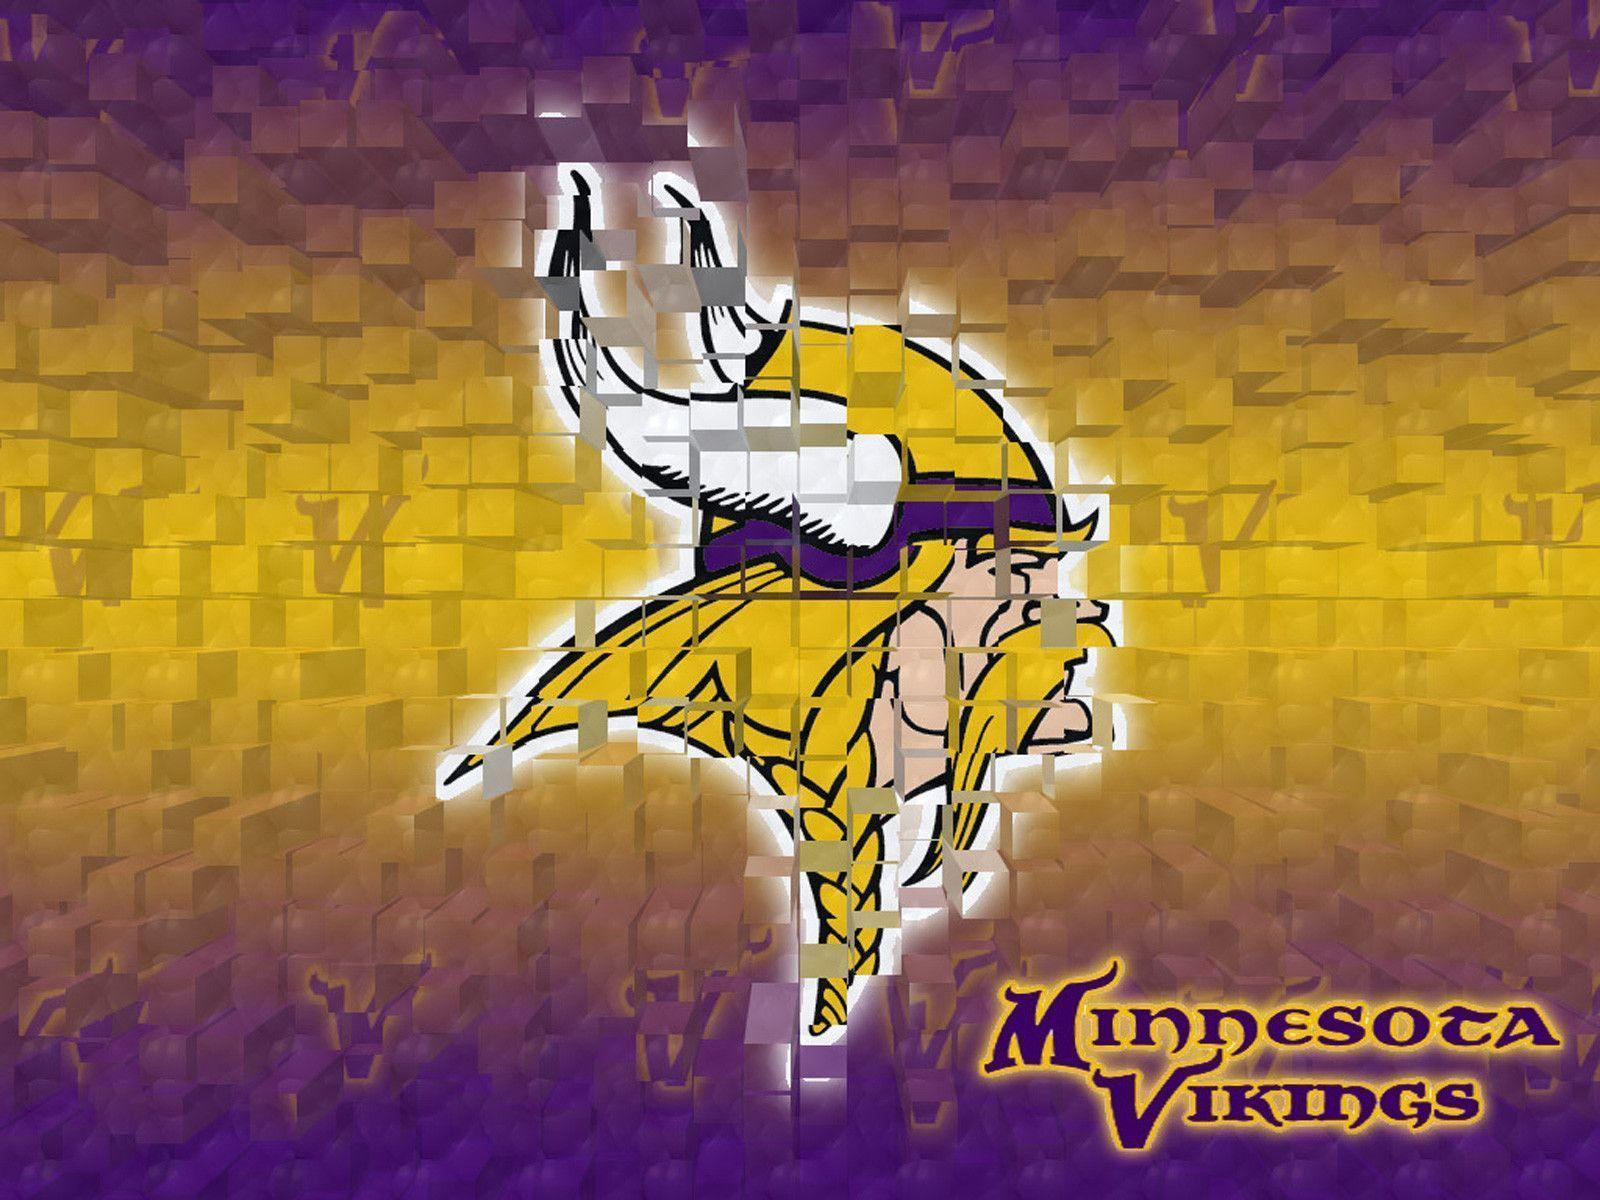 Minnesota Vikings Wallpapers For Desktop